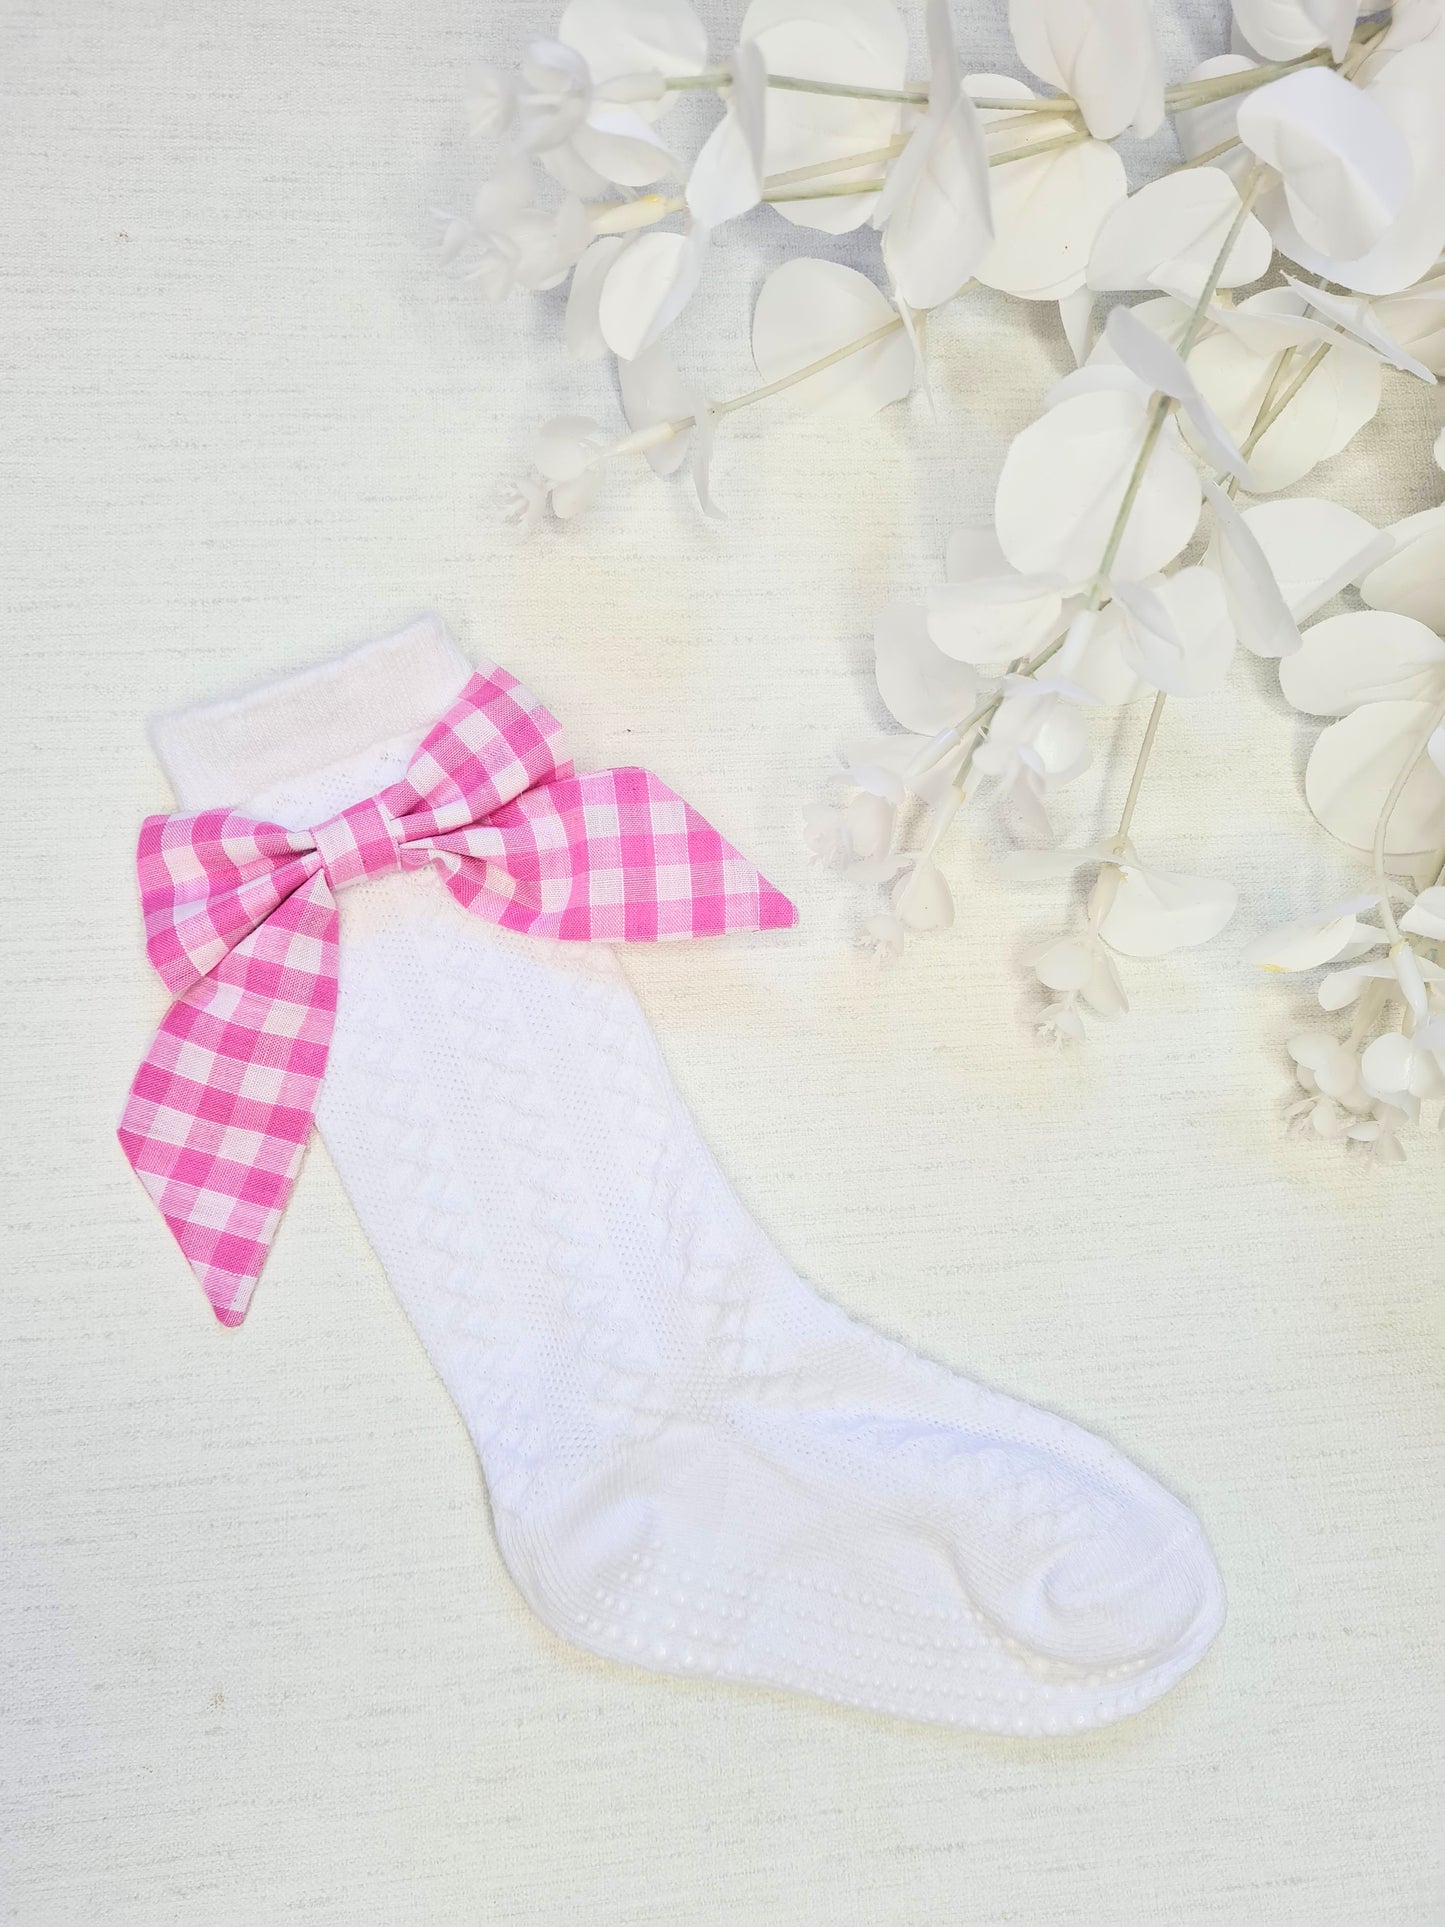 ADD ON: Matching bow socks